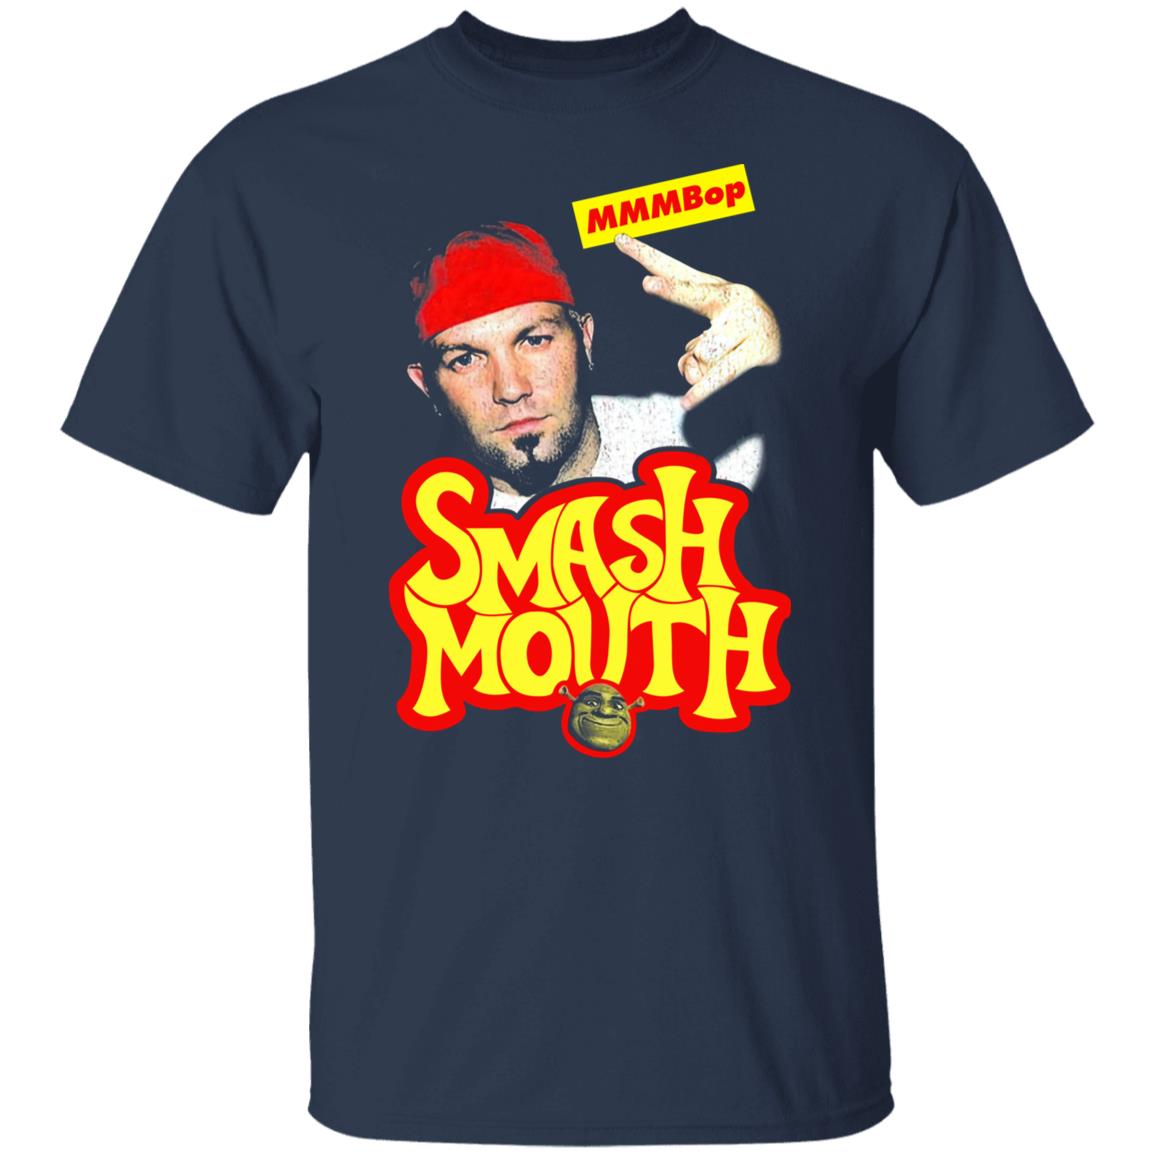 Mmmbop Smash Mouth Shirt Shirts That Go Hard Limp Bizkit